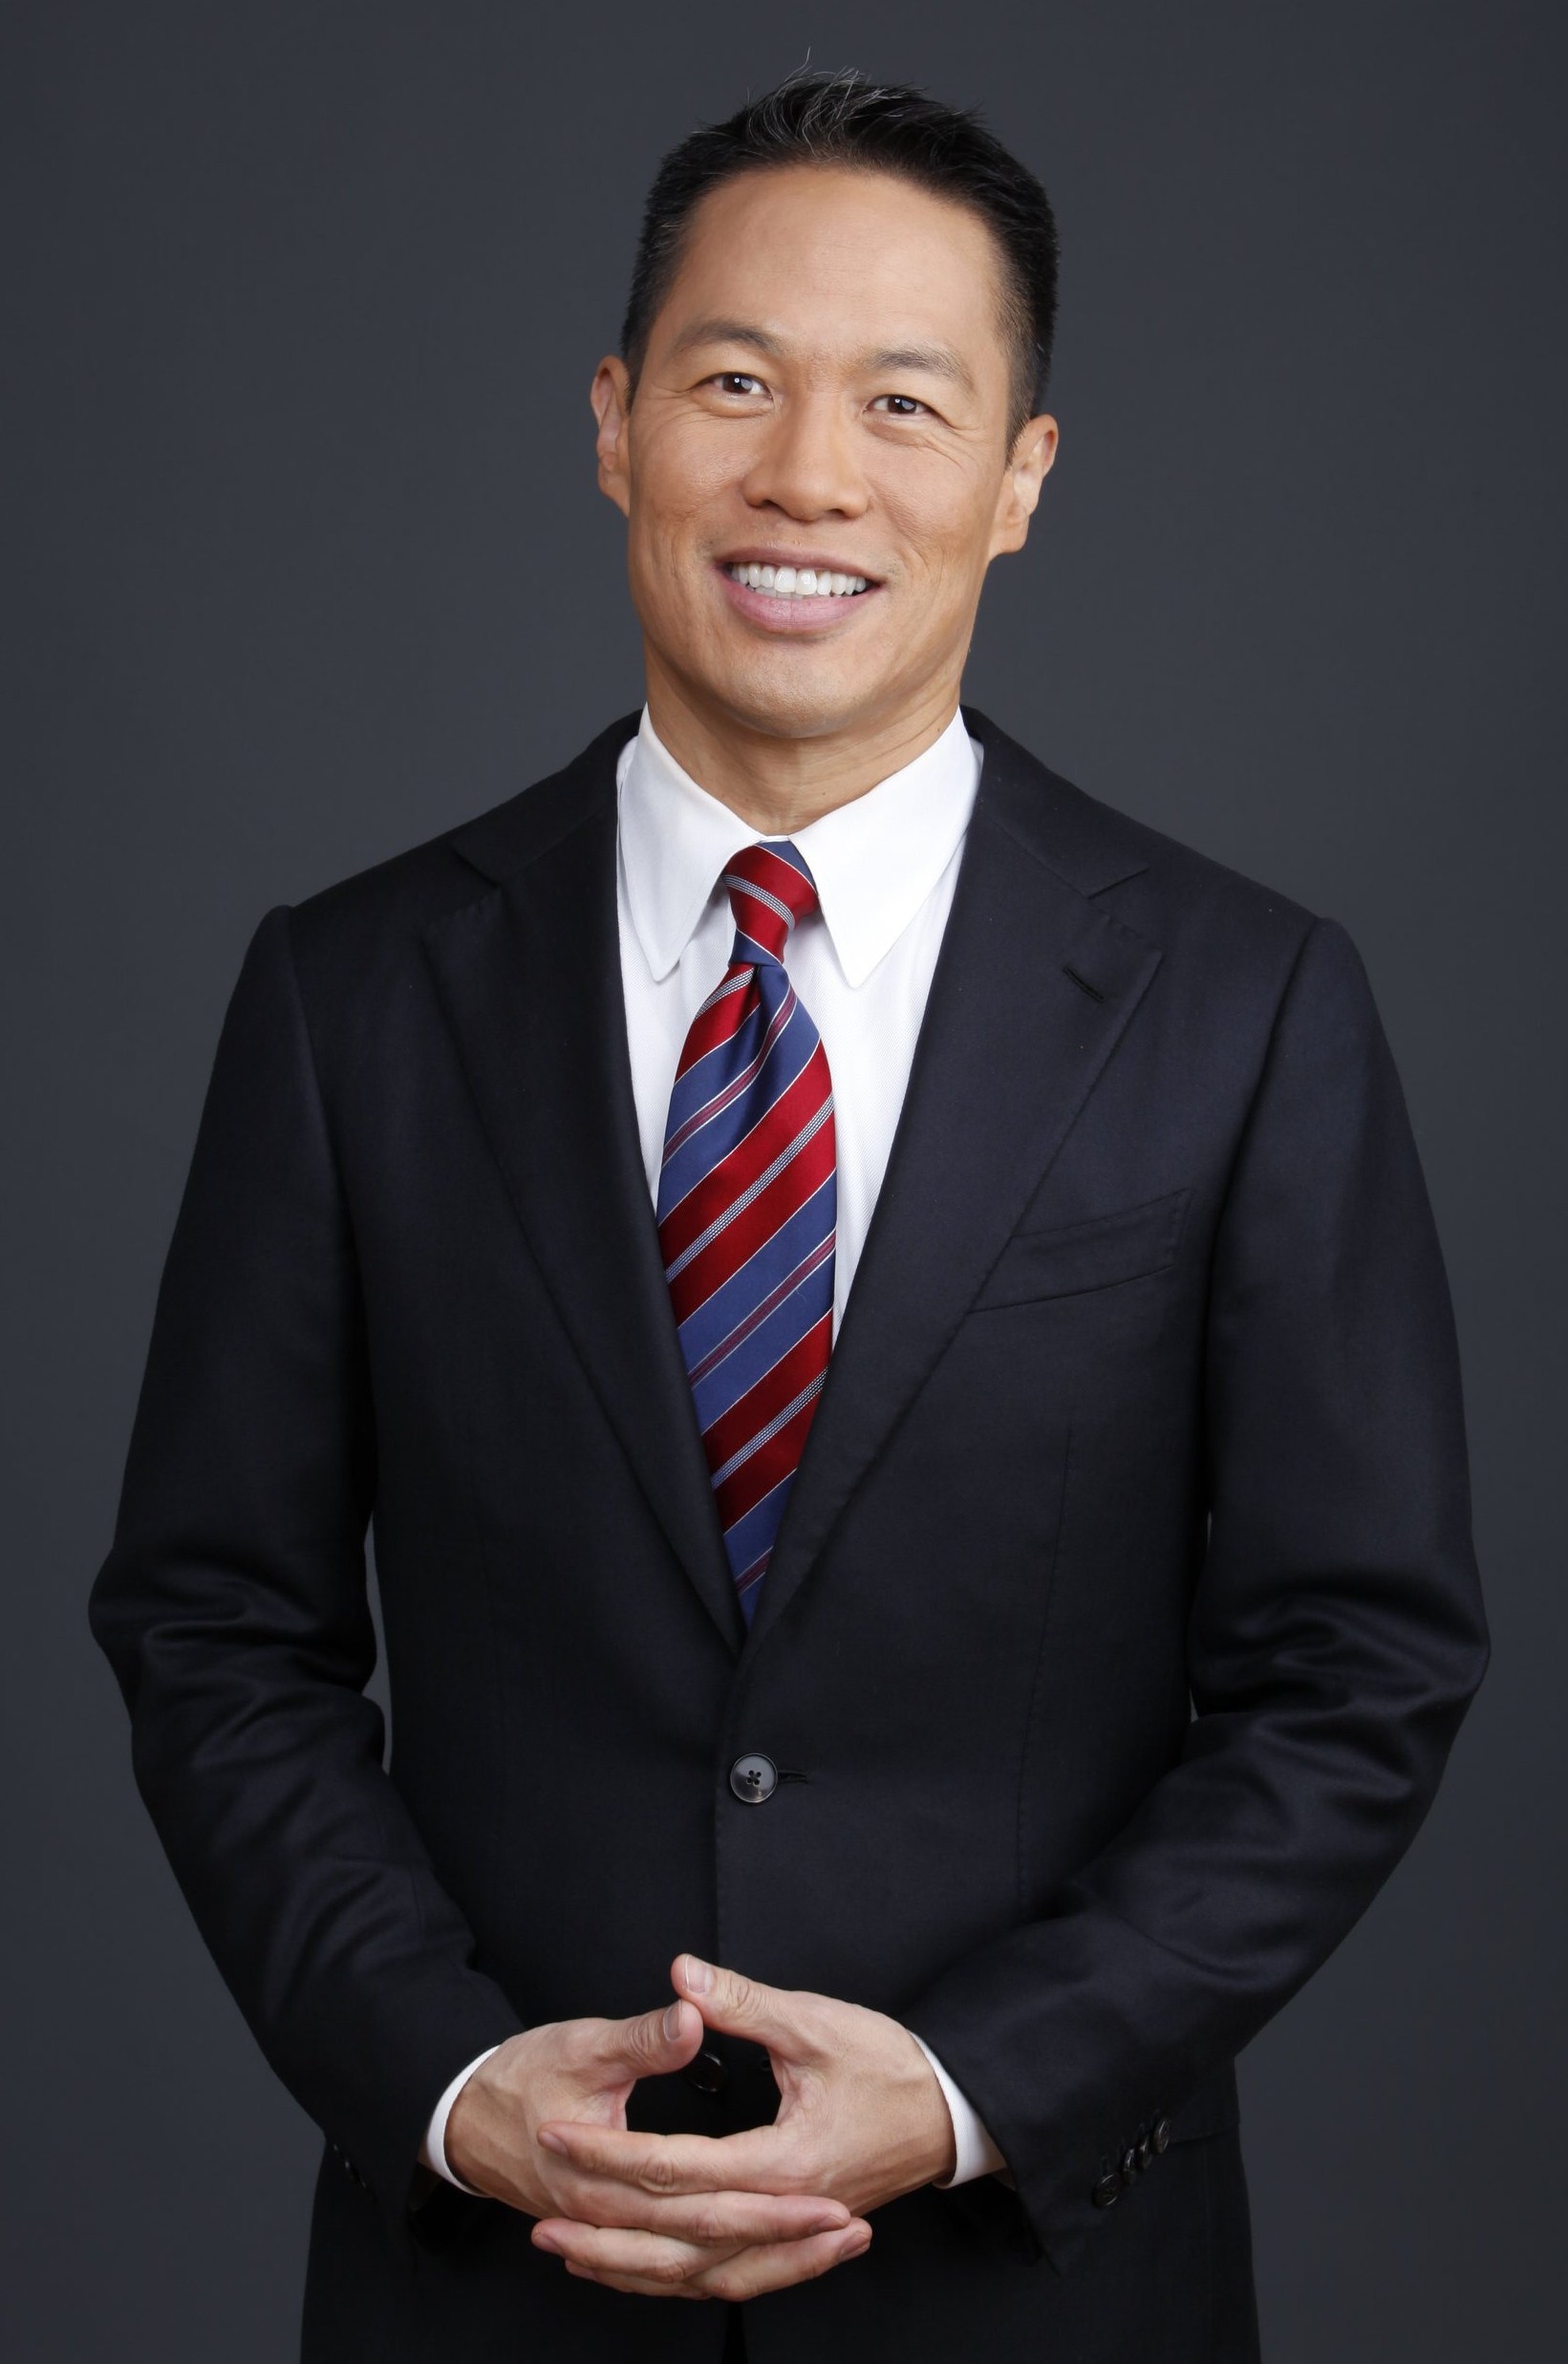 Richard Lui, MSNBC News Anchor on FAKE NEWS: cyberwarfareâ€™s cousin is more than misinformation